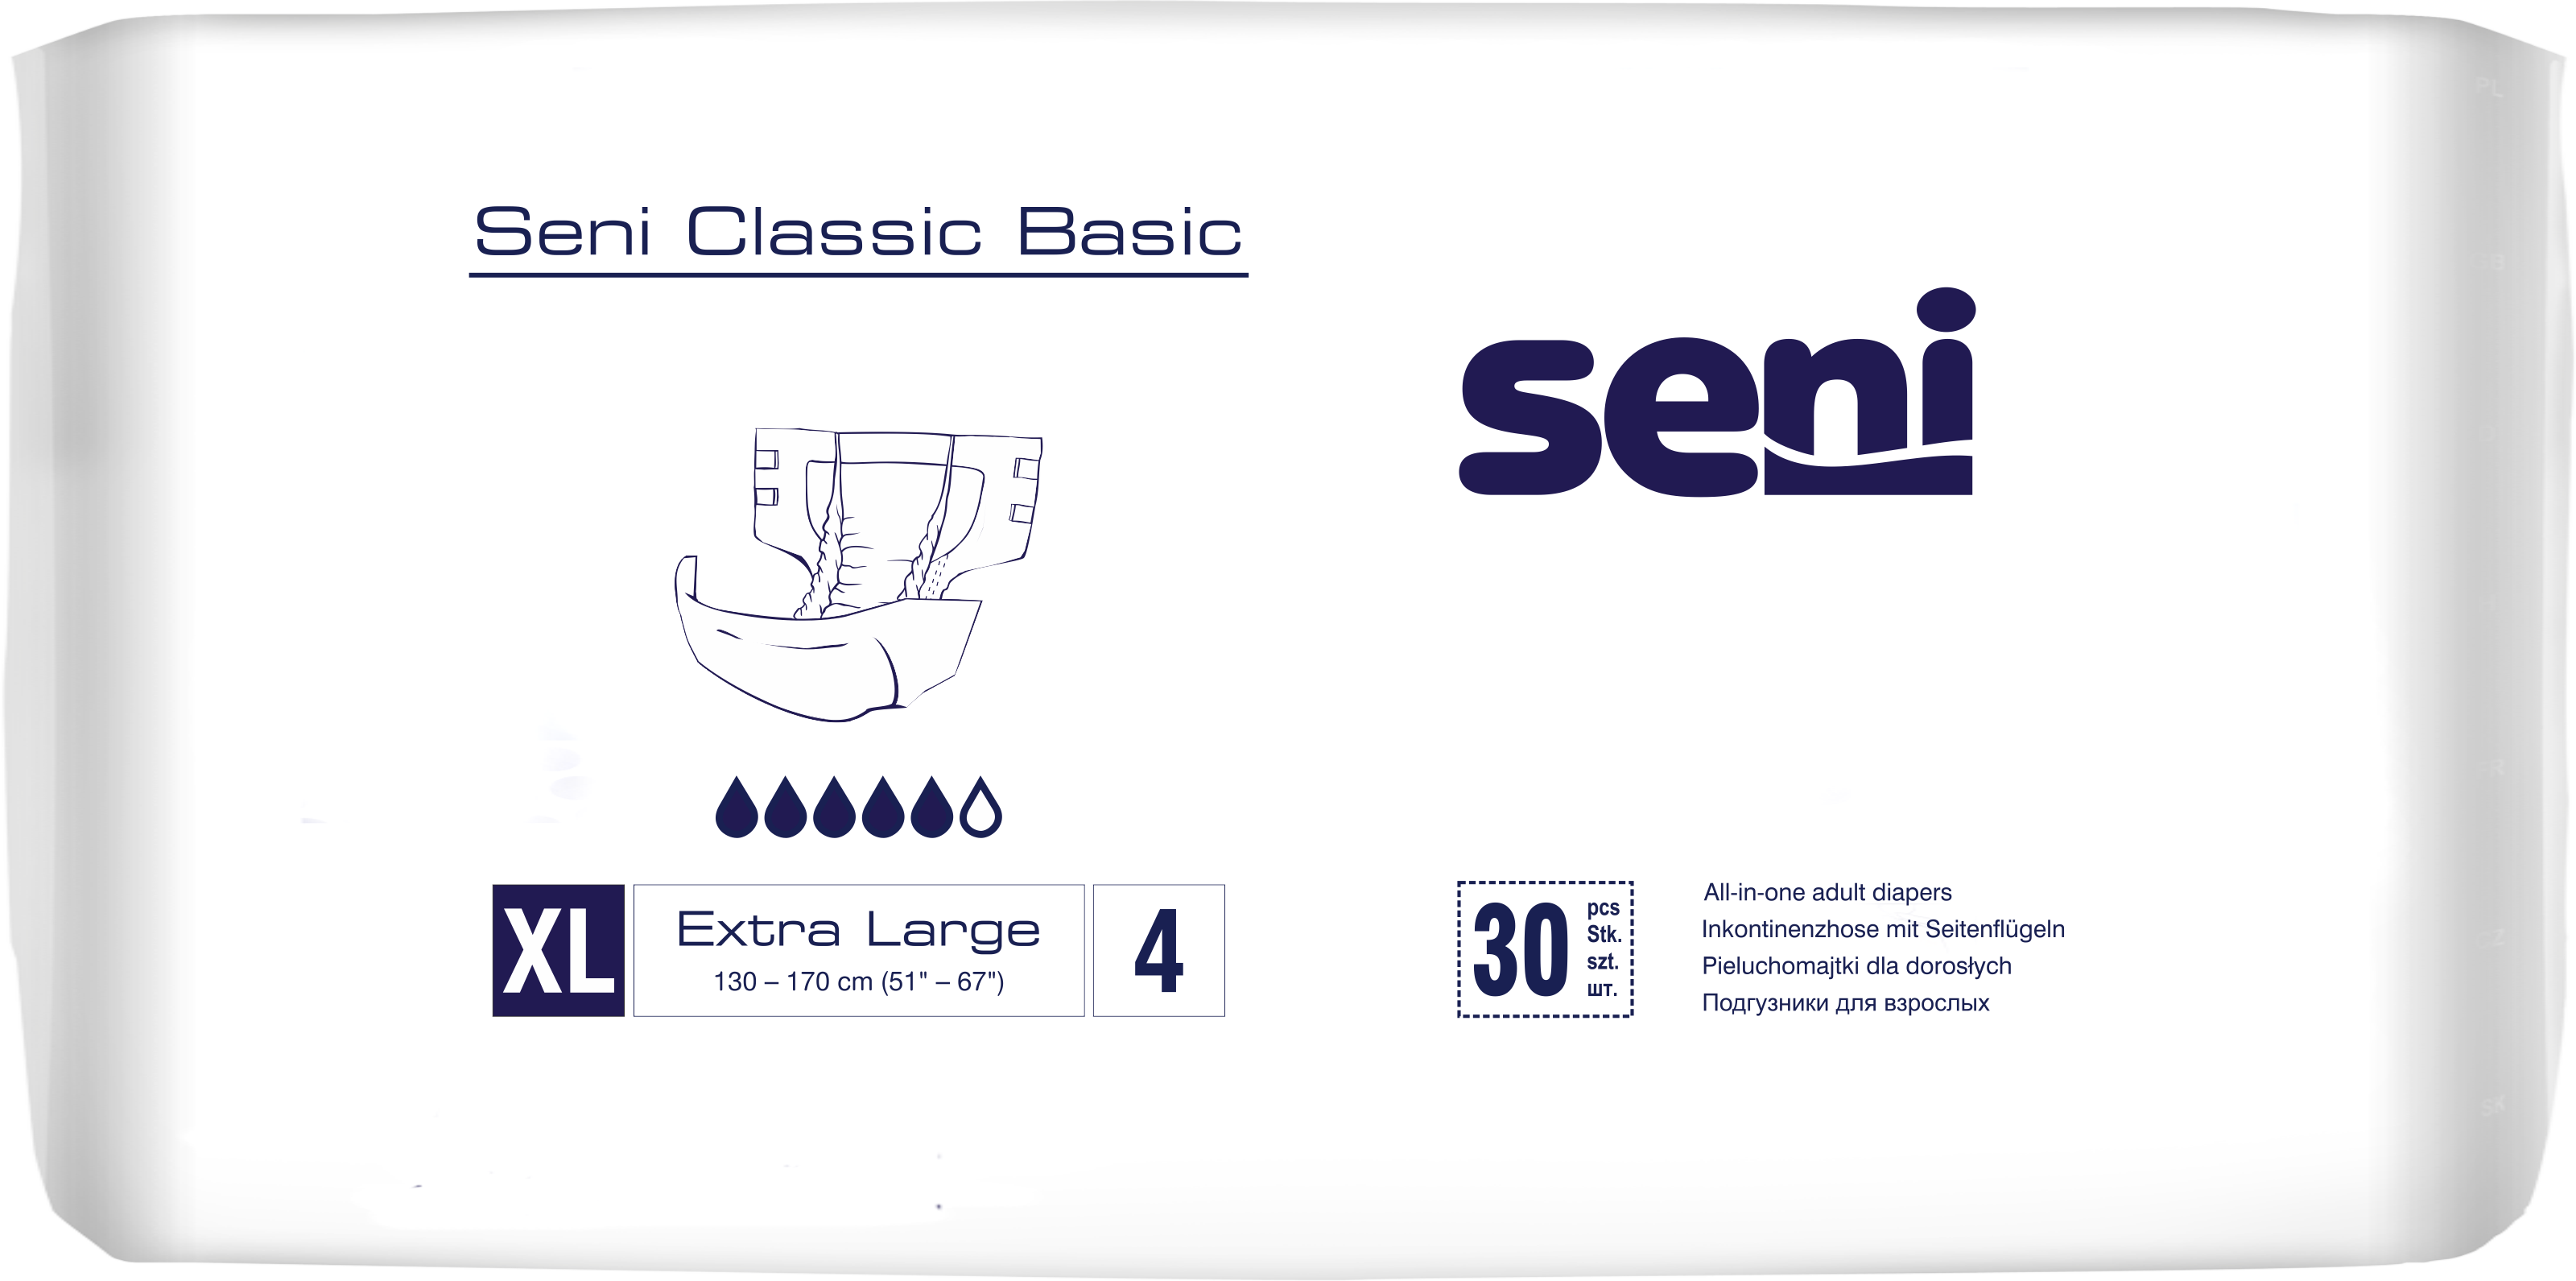 Seni Classic Basic atmungsaktive Inkontinenzhosen Extra Large 30 Stück